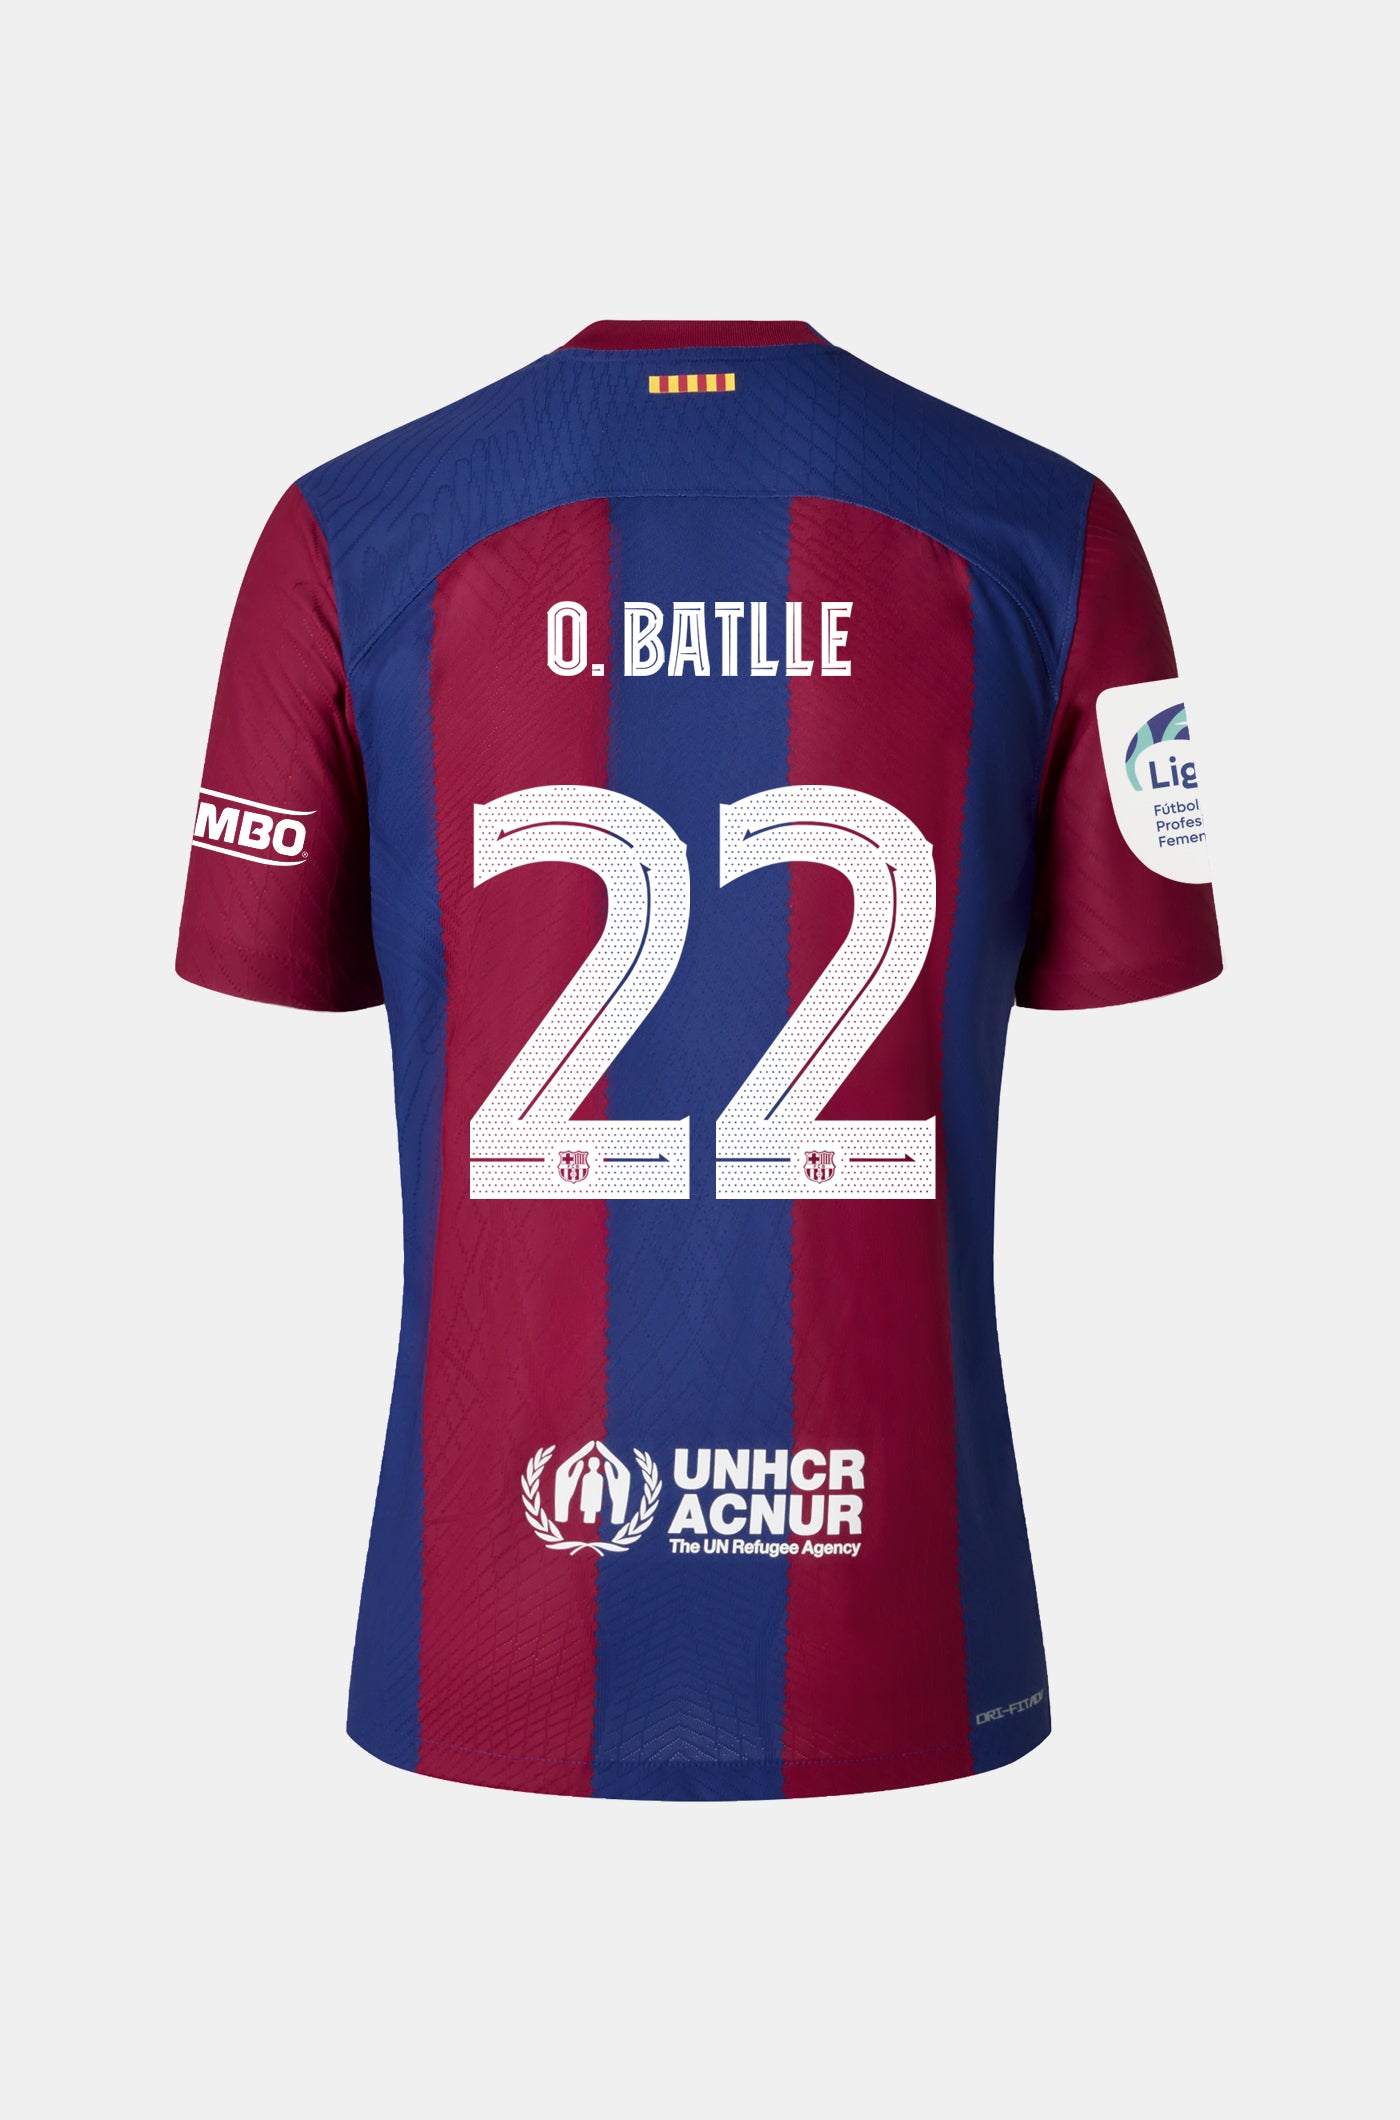 Liga F FC Barcelona home shirt 23/24 Player’s Edition - O. BATLLE